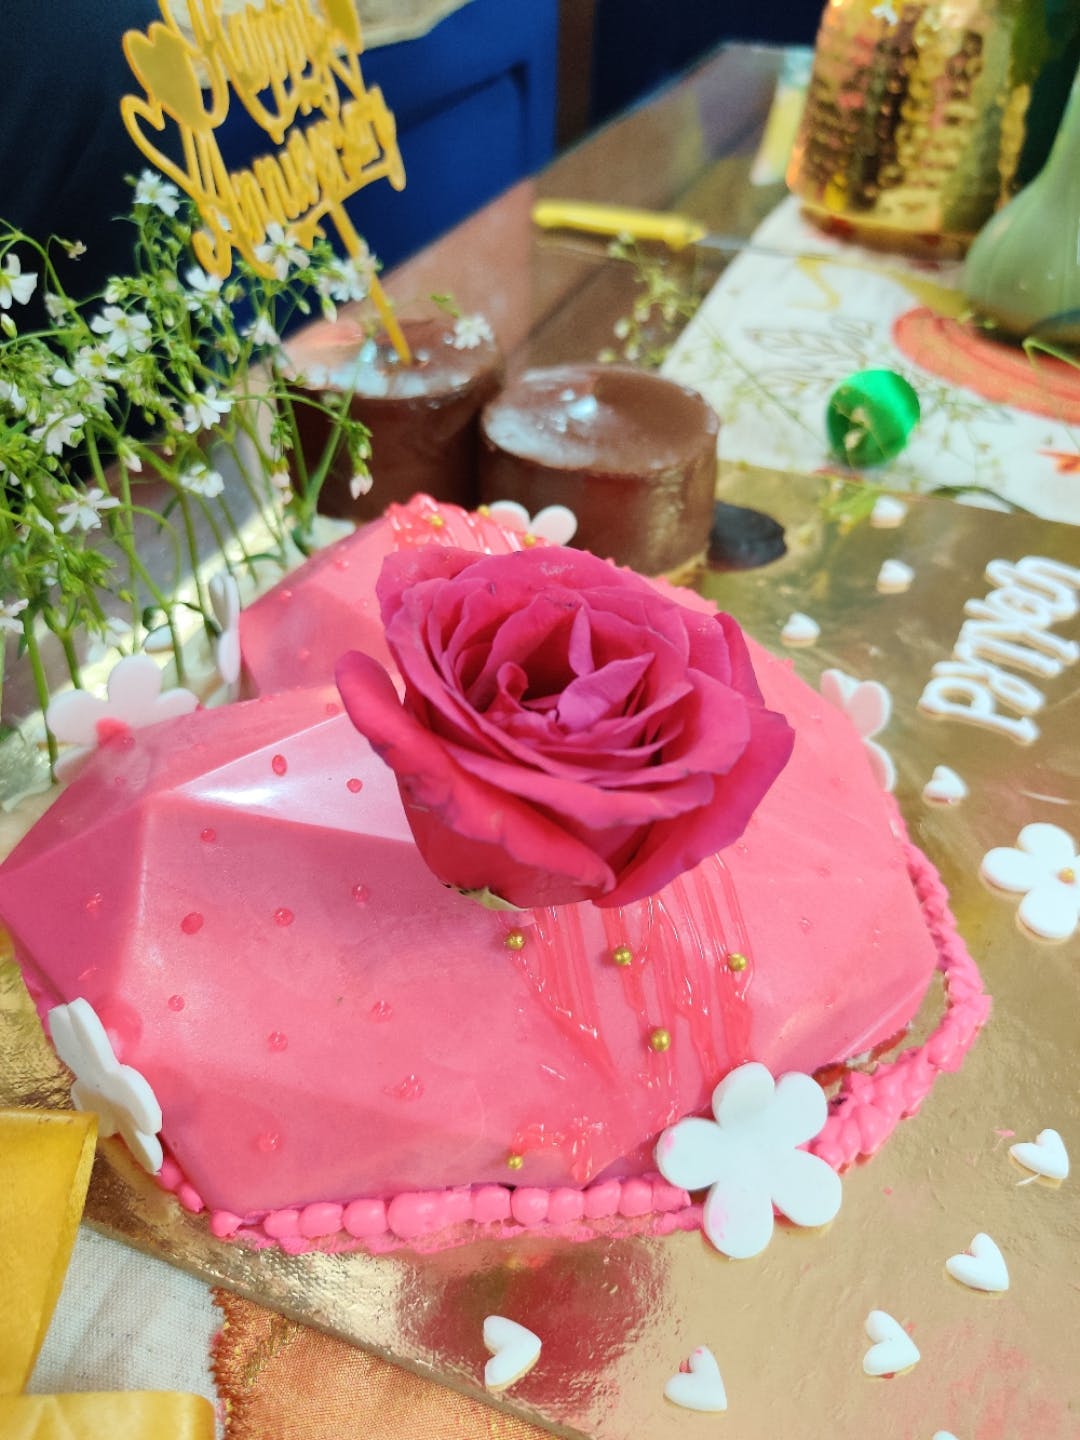 Petal,Sweetness,Pink,Ingredient,Dessert,Cake,Flowering plant,Peach,Cake decorating,Rose family